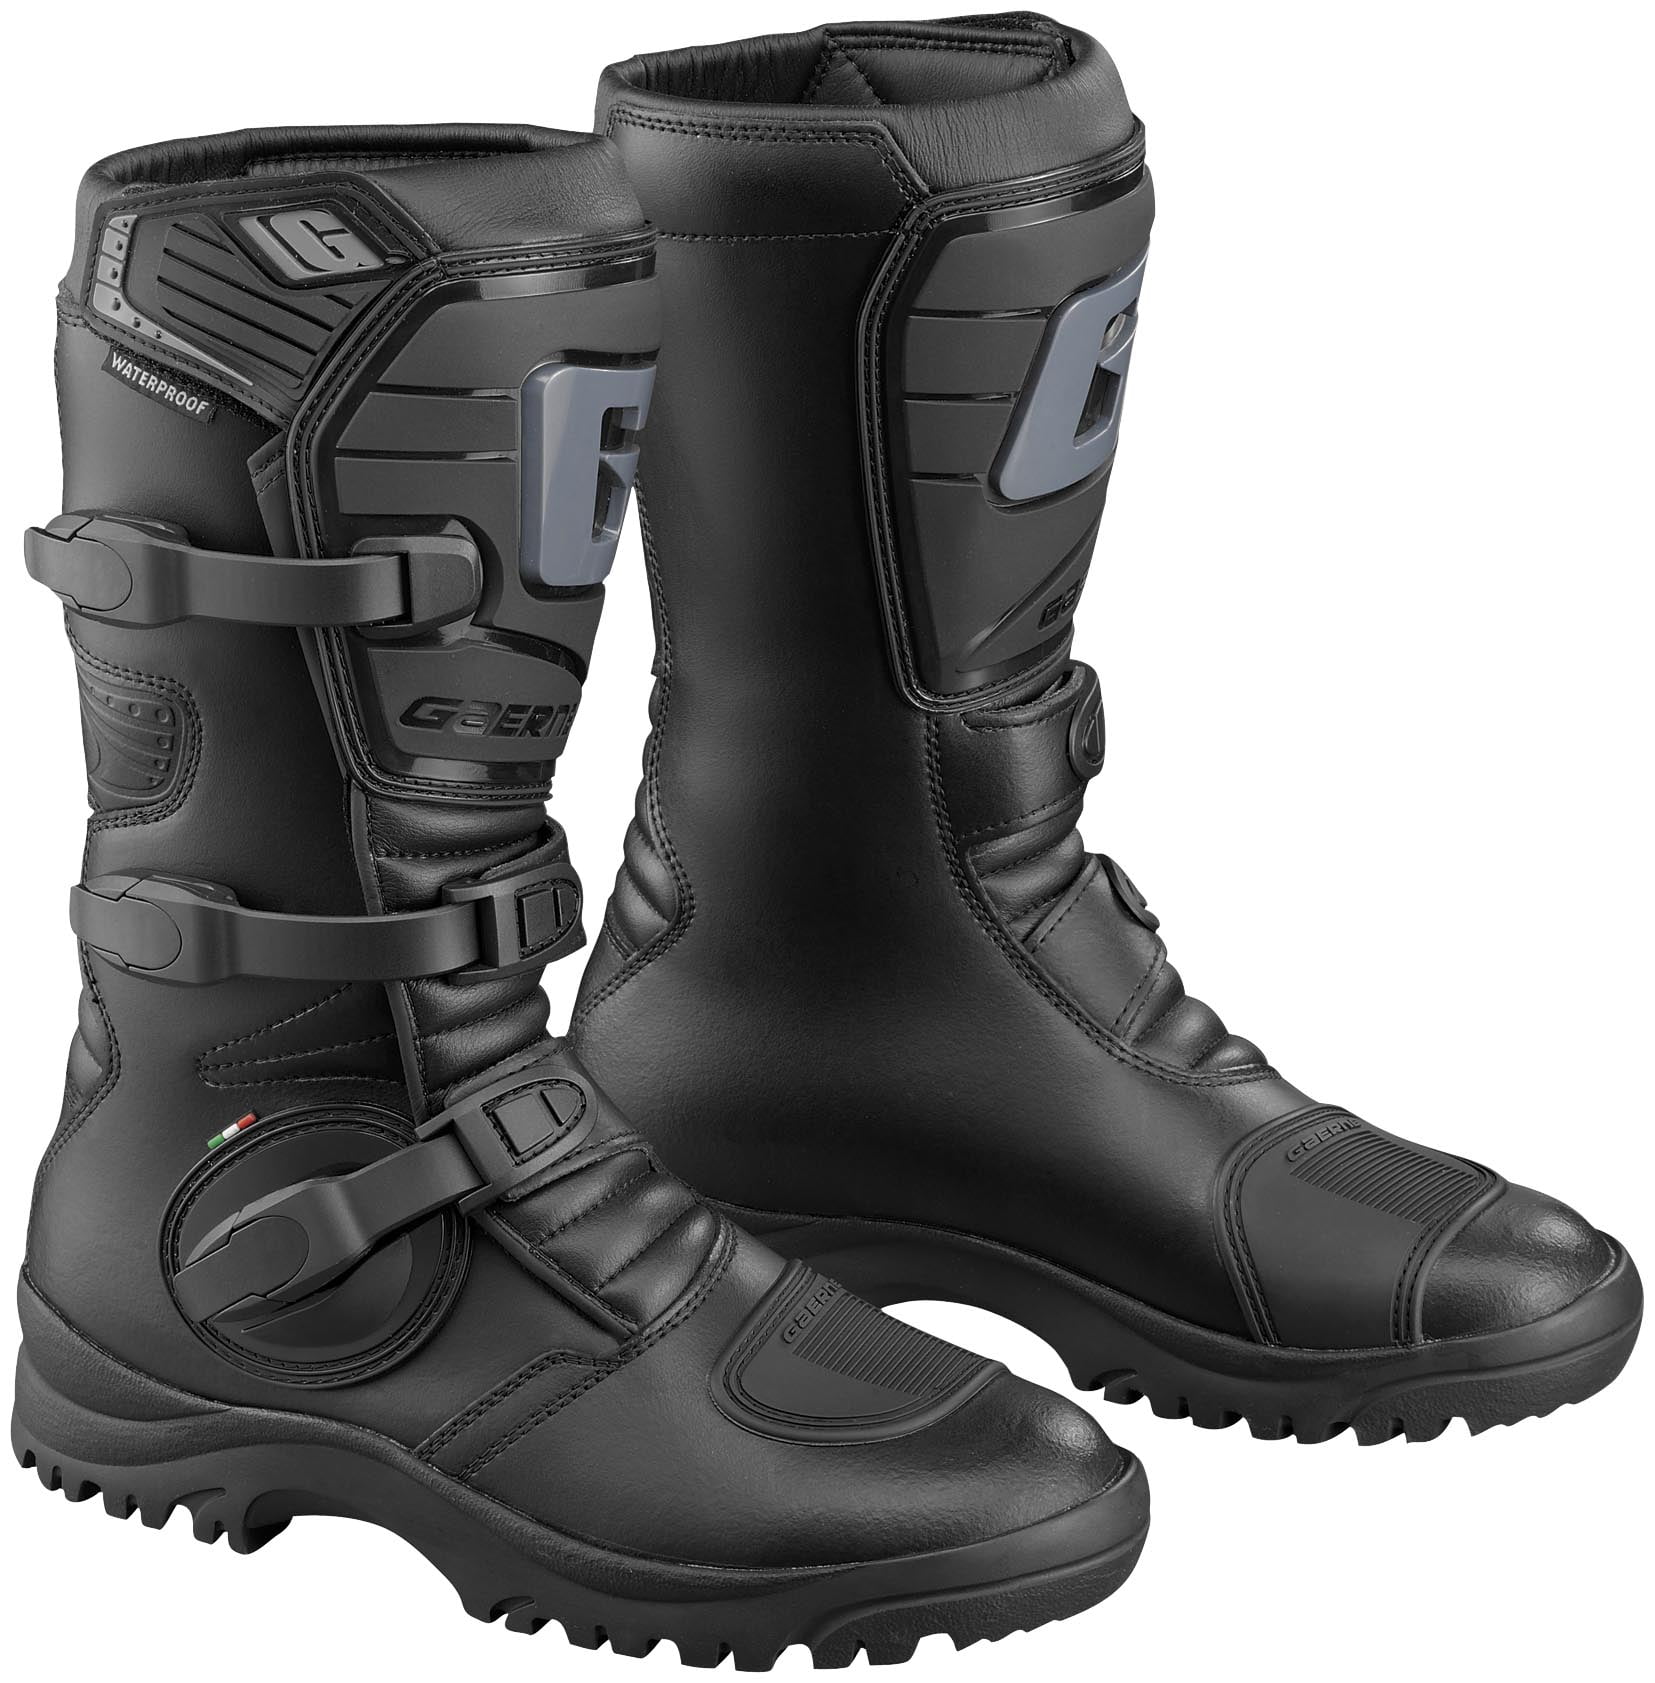 Gaerne G-Adventure Boots Black 11 2525-001-11 - Walmart.com